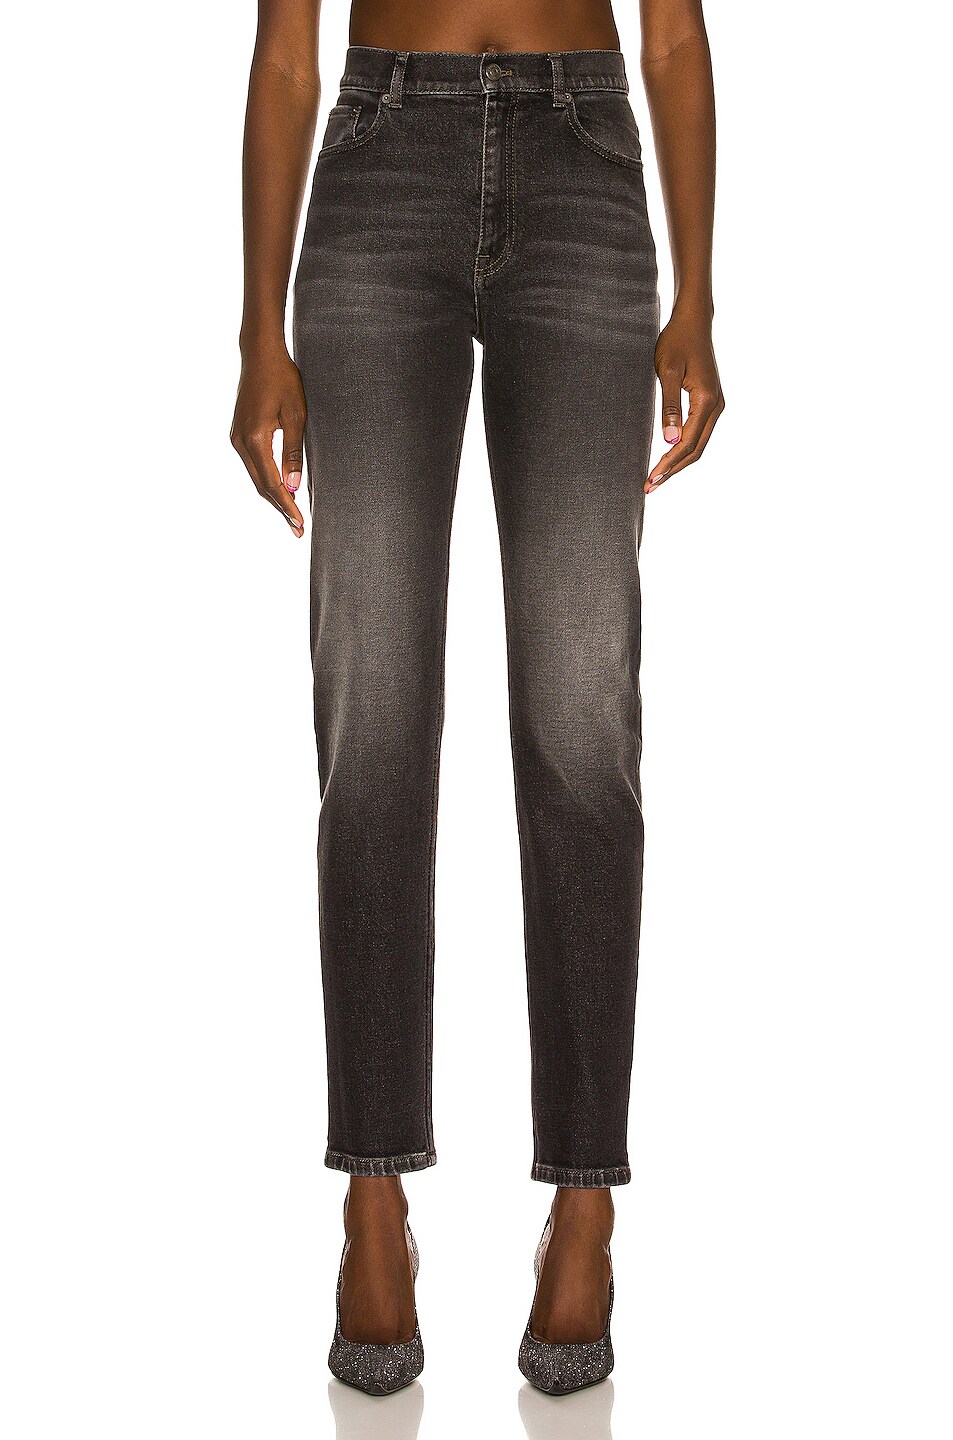 Balenciaga Skinny Jean in Washed Black & White | FWRD